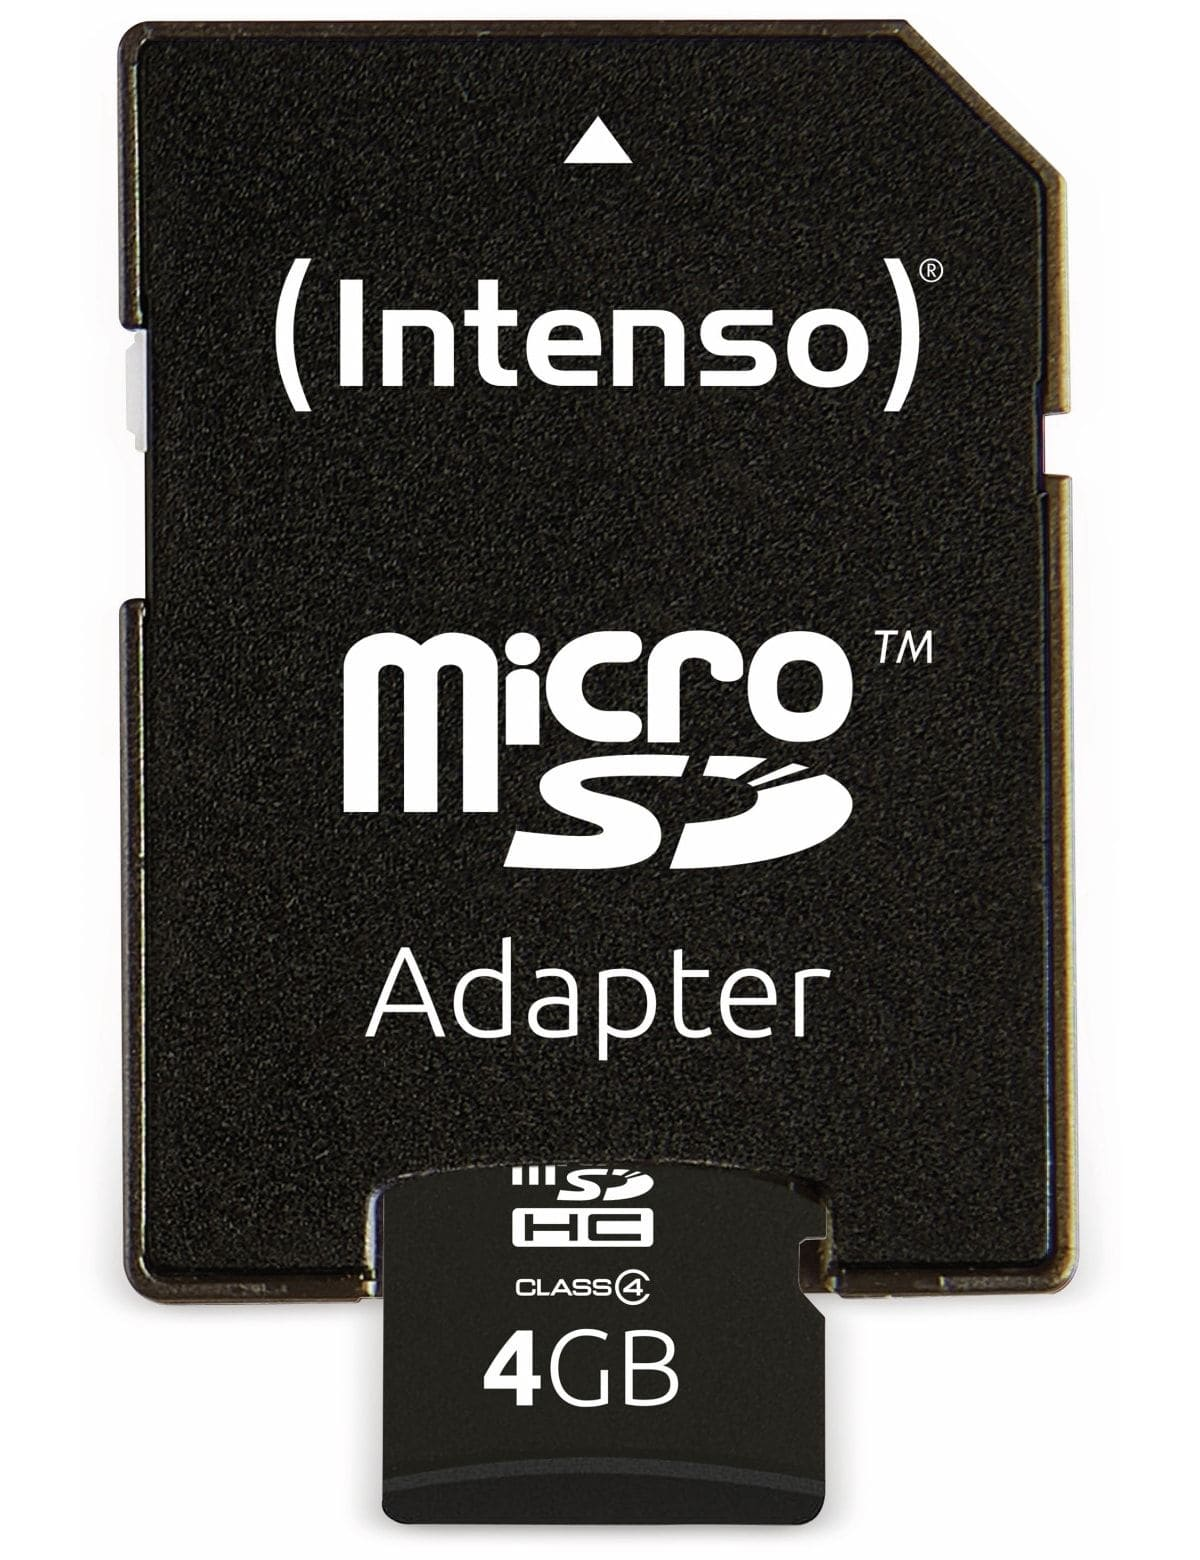 MICRO-SDHC+ADAPTER, MB/s 3403450 4 INTENSO GB, 4GB 21 Micro-SDHC Speicherkarte,